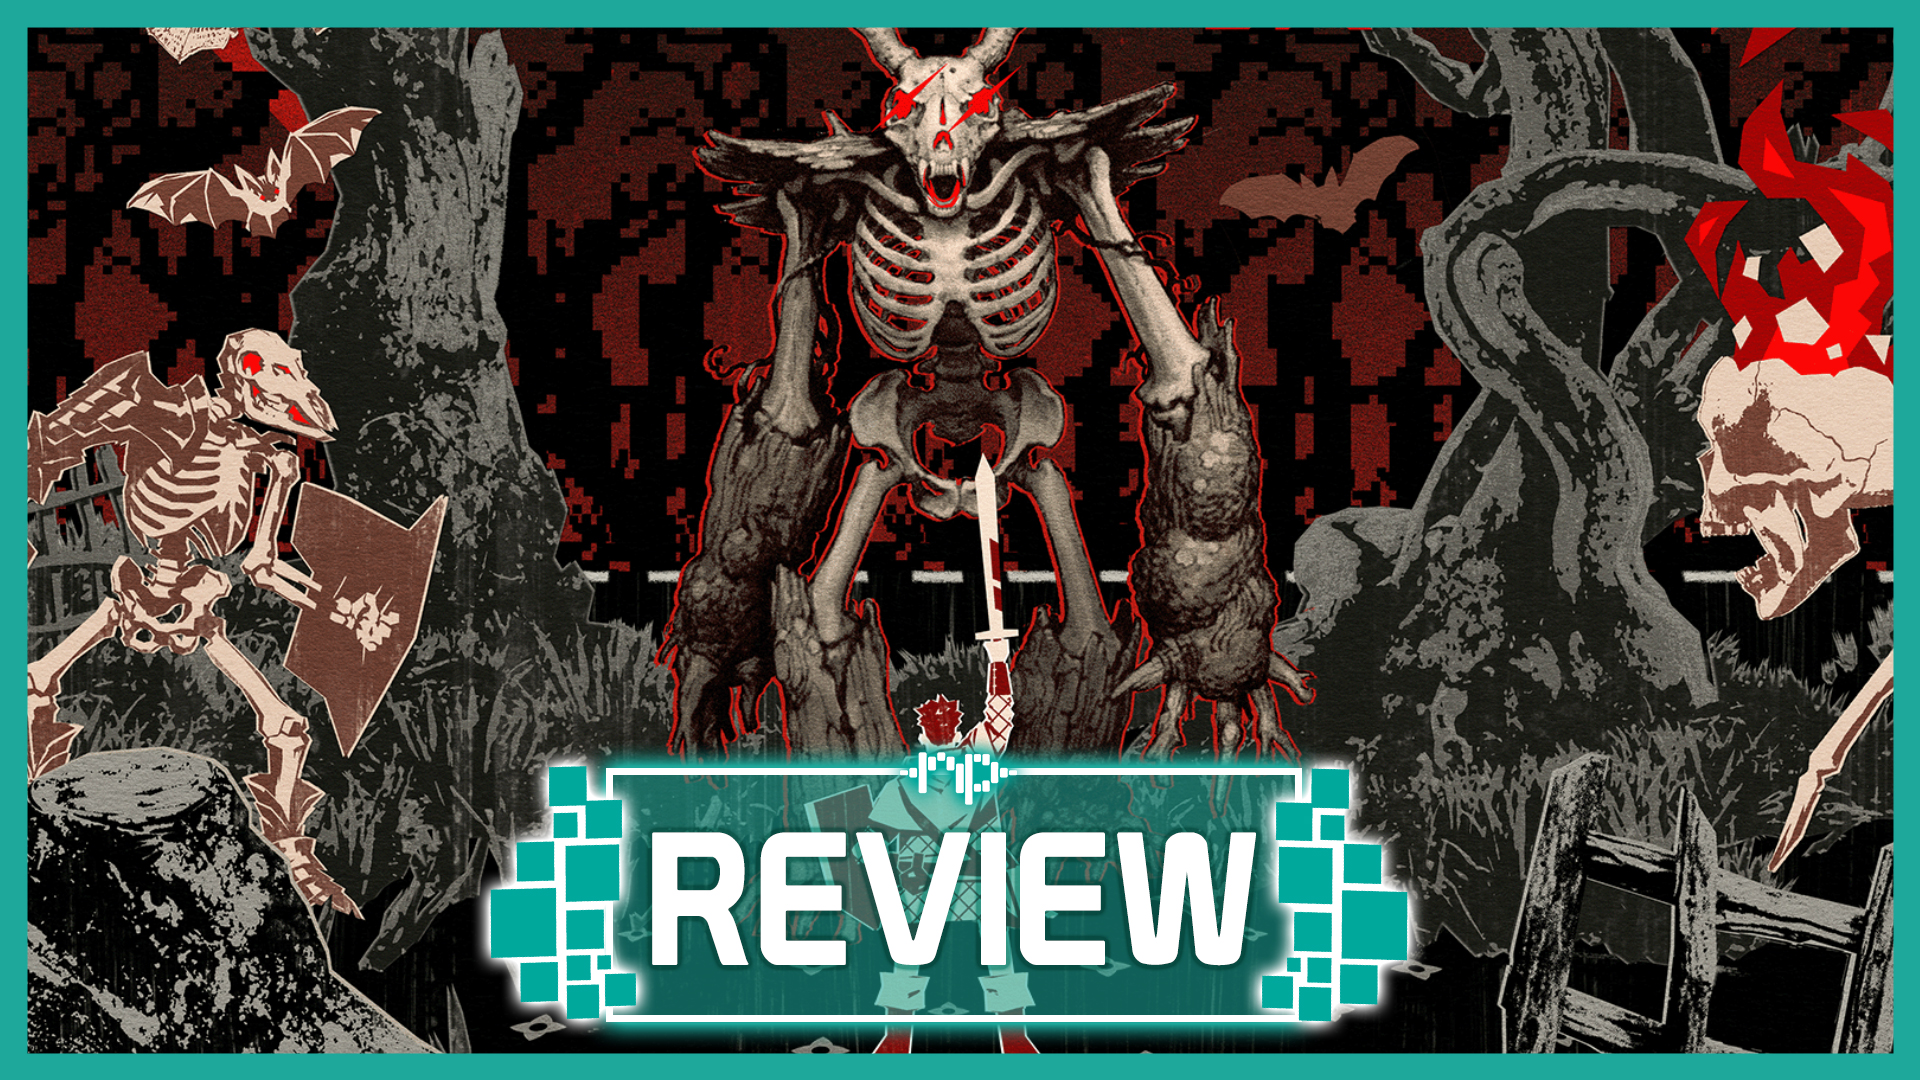 Bleak Sword DX Review – Retro Gameplay, Modern Frustration